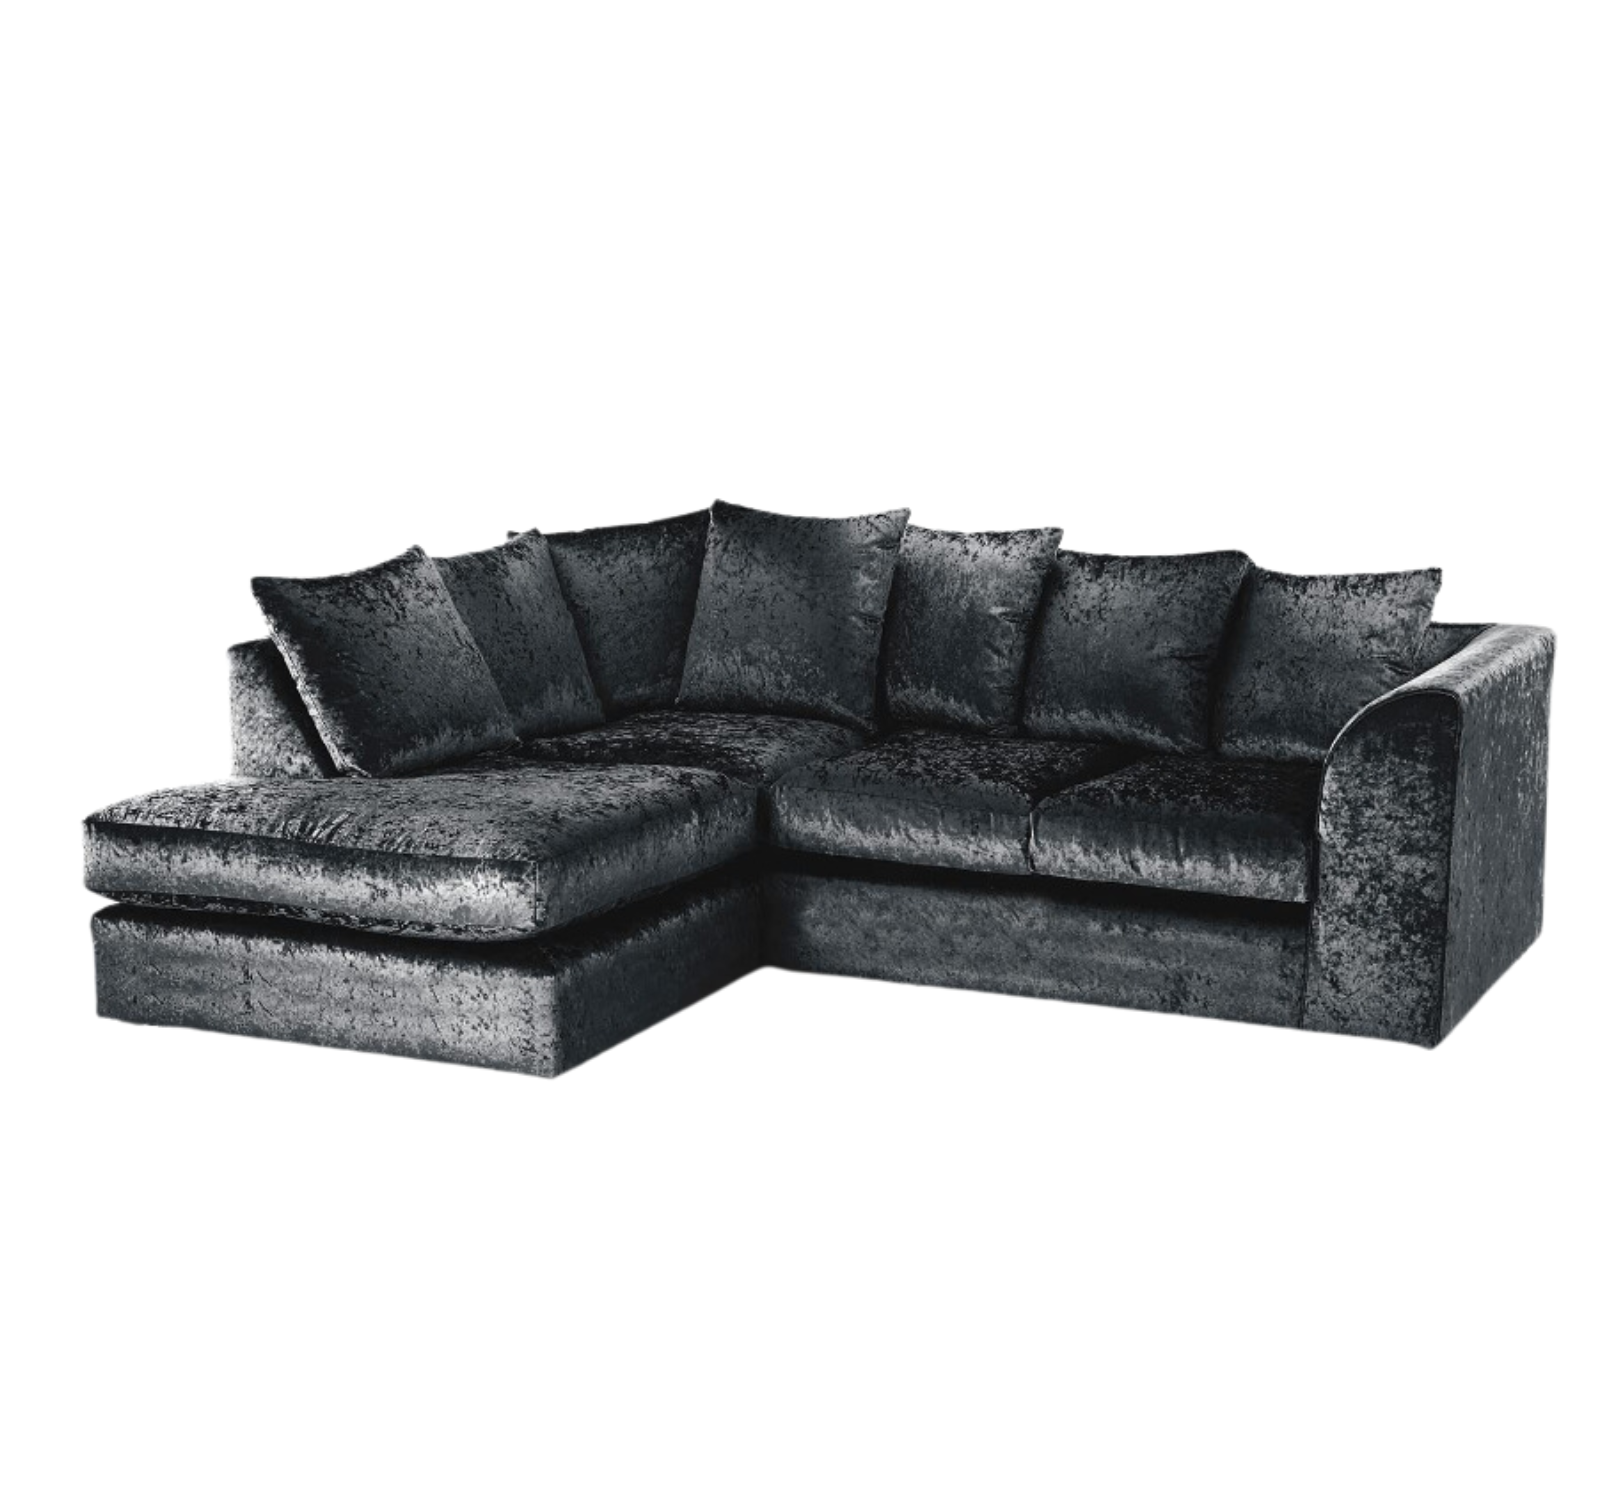 Elegant Crushed Velvet 4-Seater Corner Sofa, Luxurious Comfort for Your Living Space (Scatter Back)